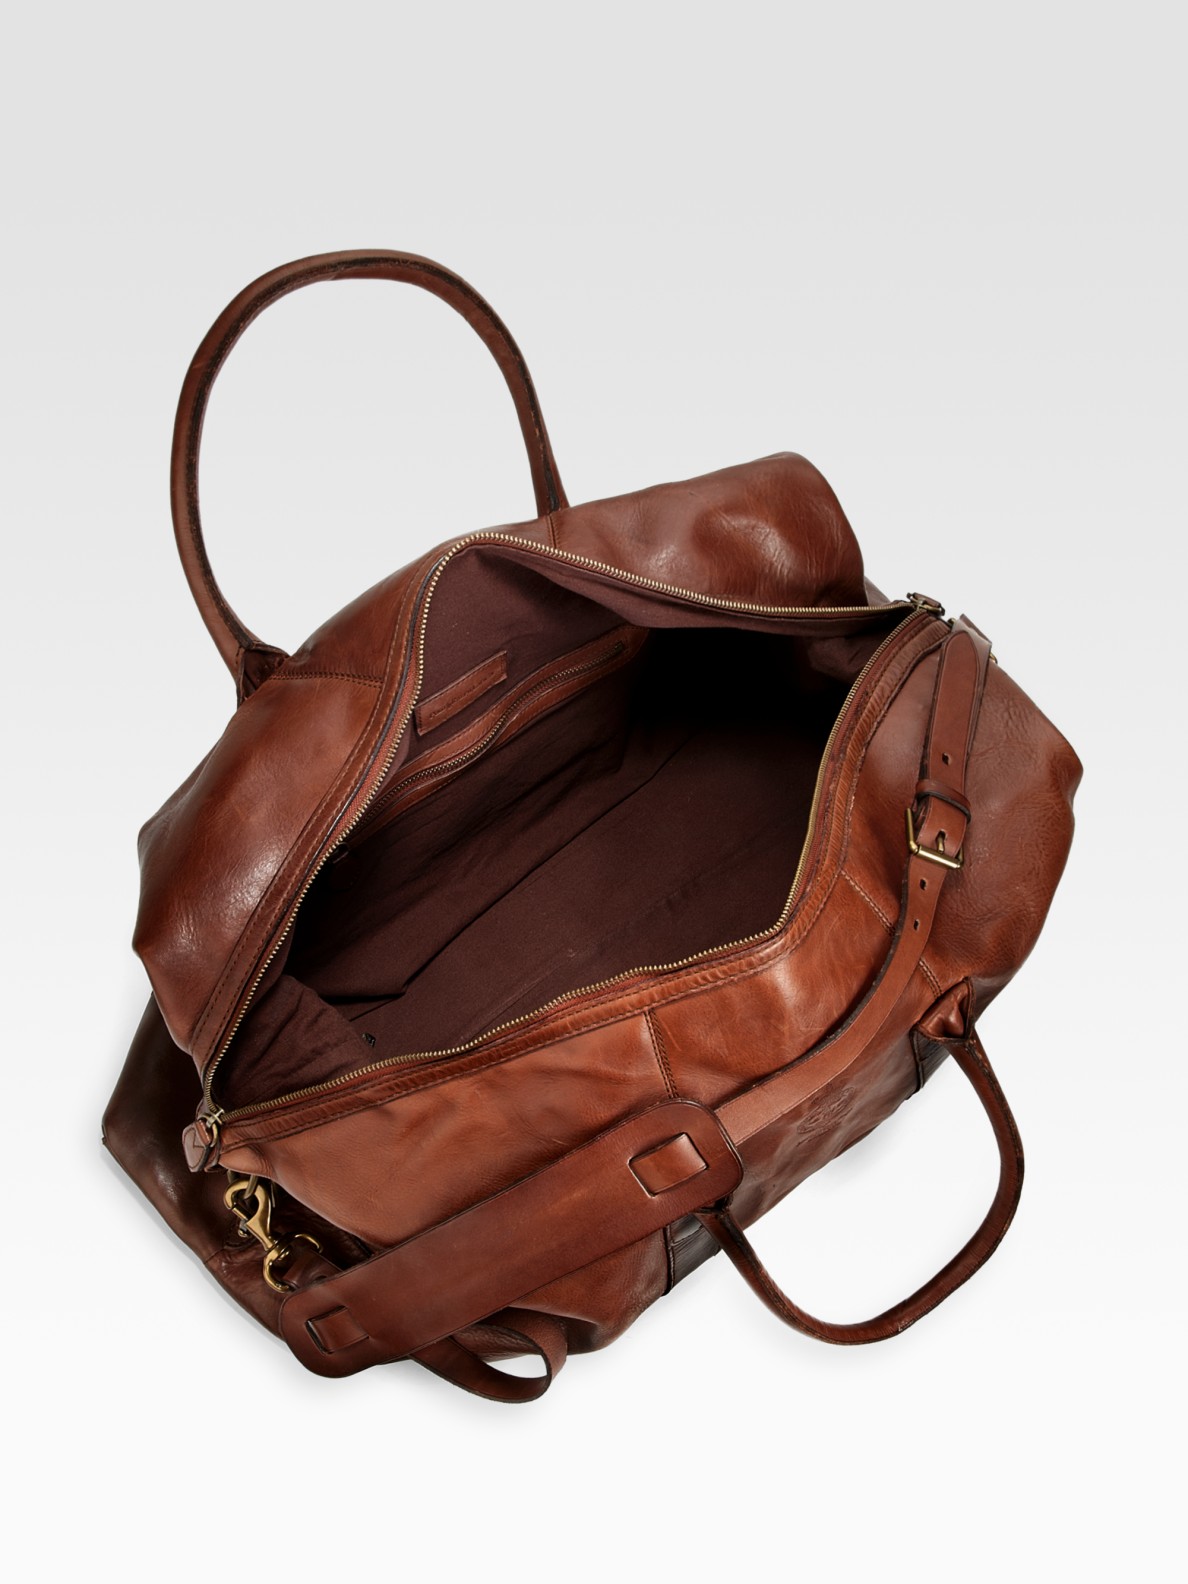 Lyst - Polo Ralph Lauren Leather Duffel in Brown for Men